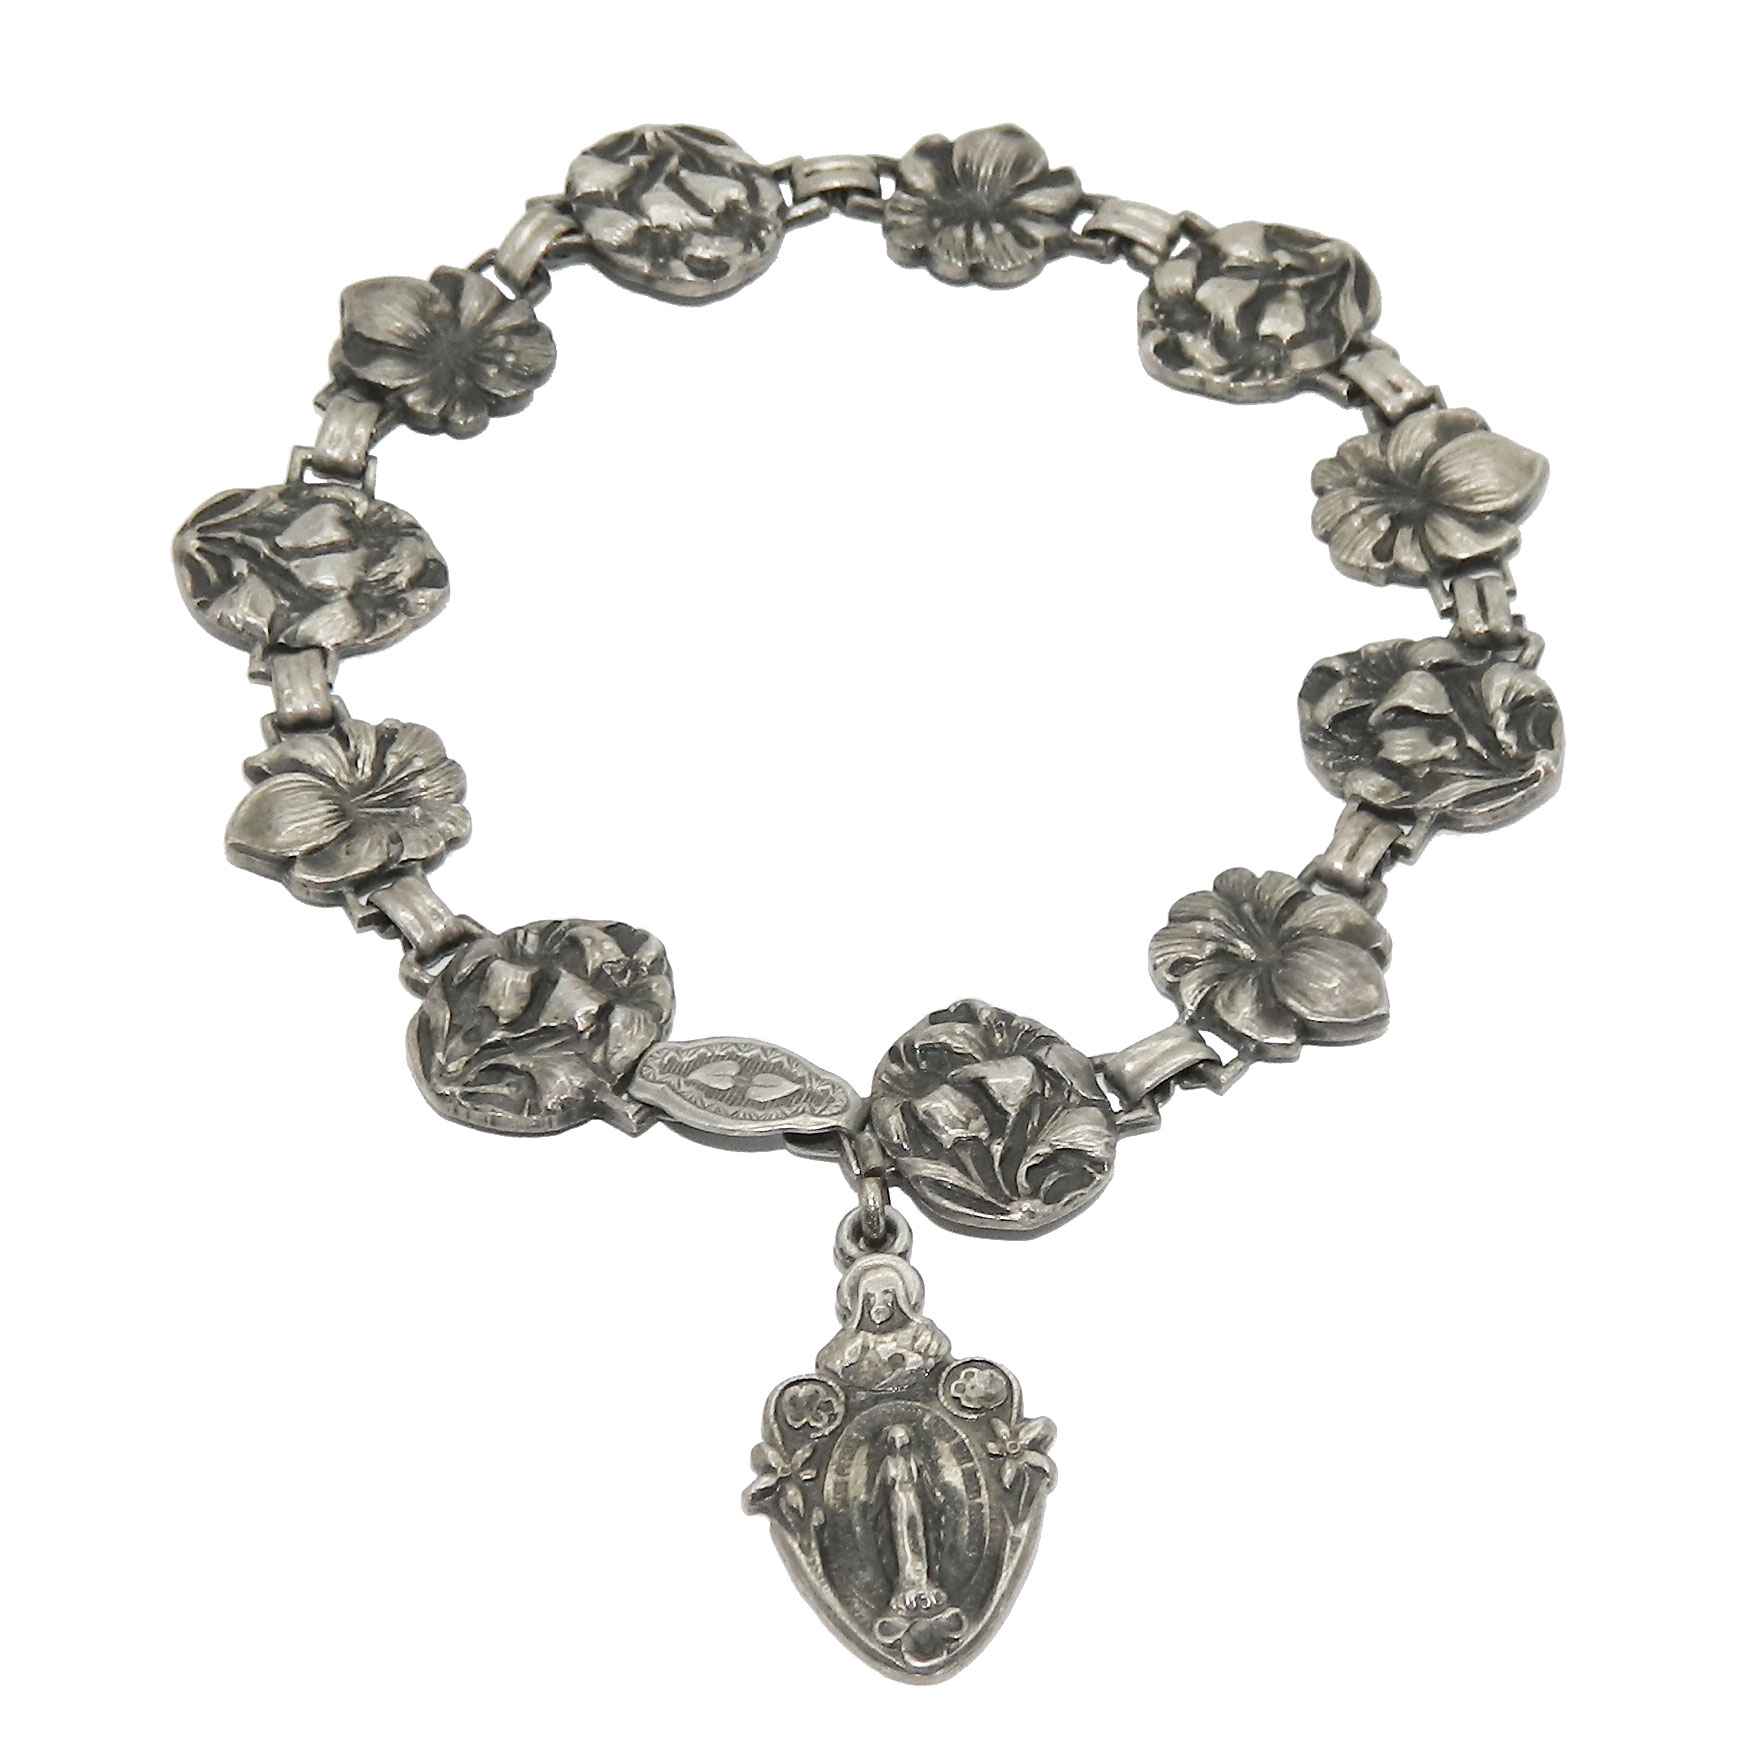 Antique rosary sterling charm bracelet